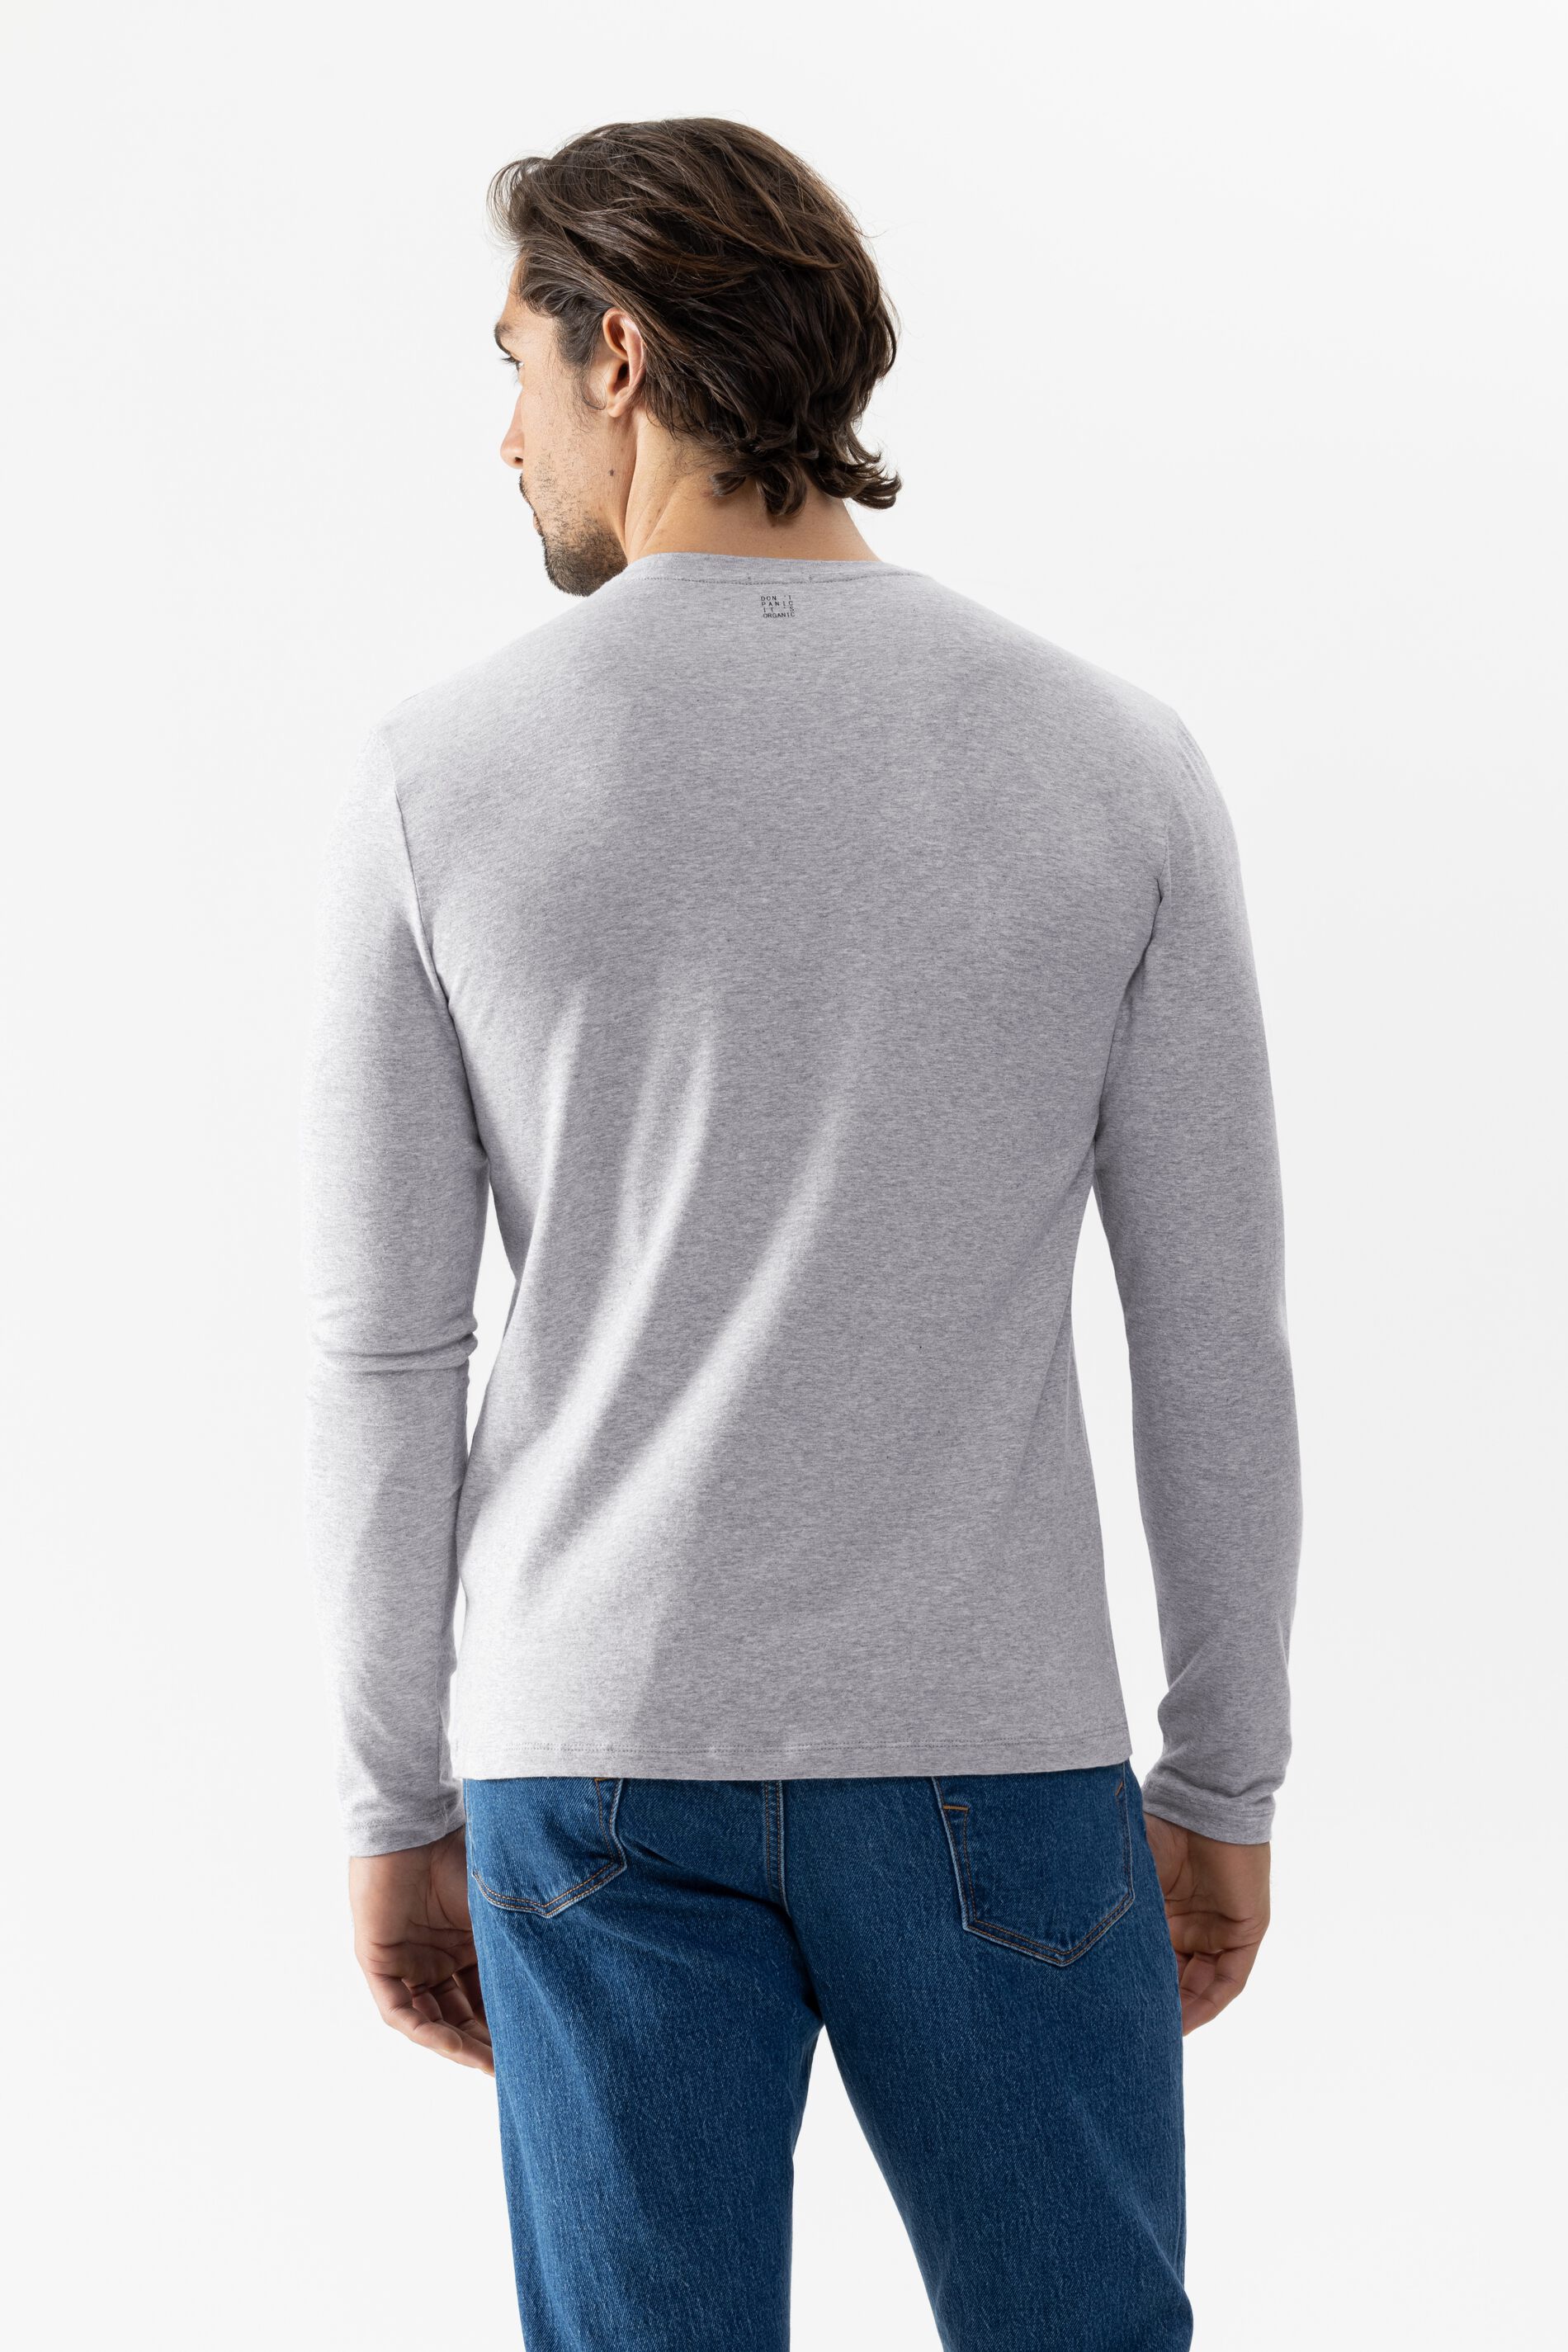 Long-sleeved shirt Serie Relax Rear View | mey®